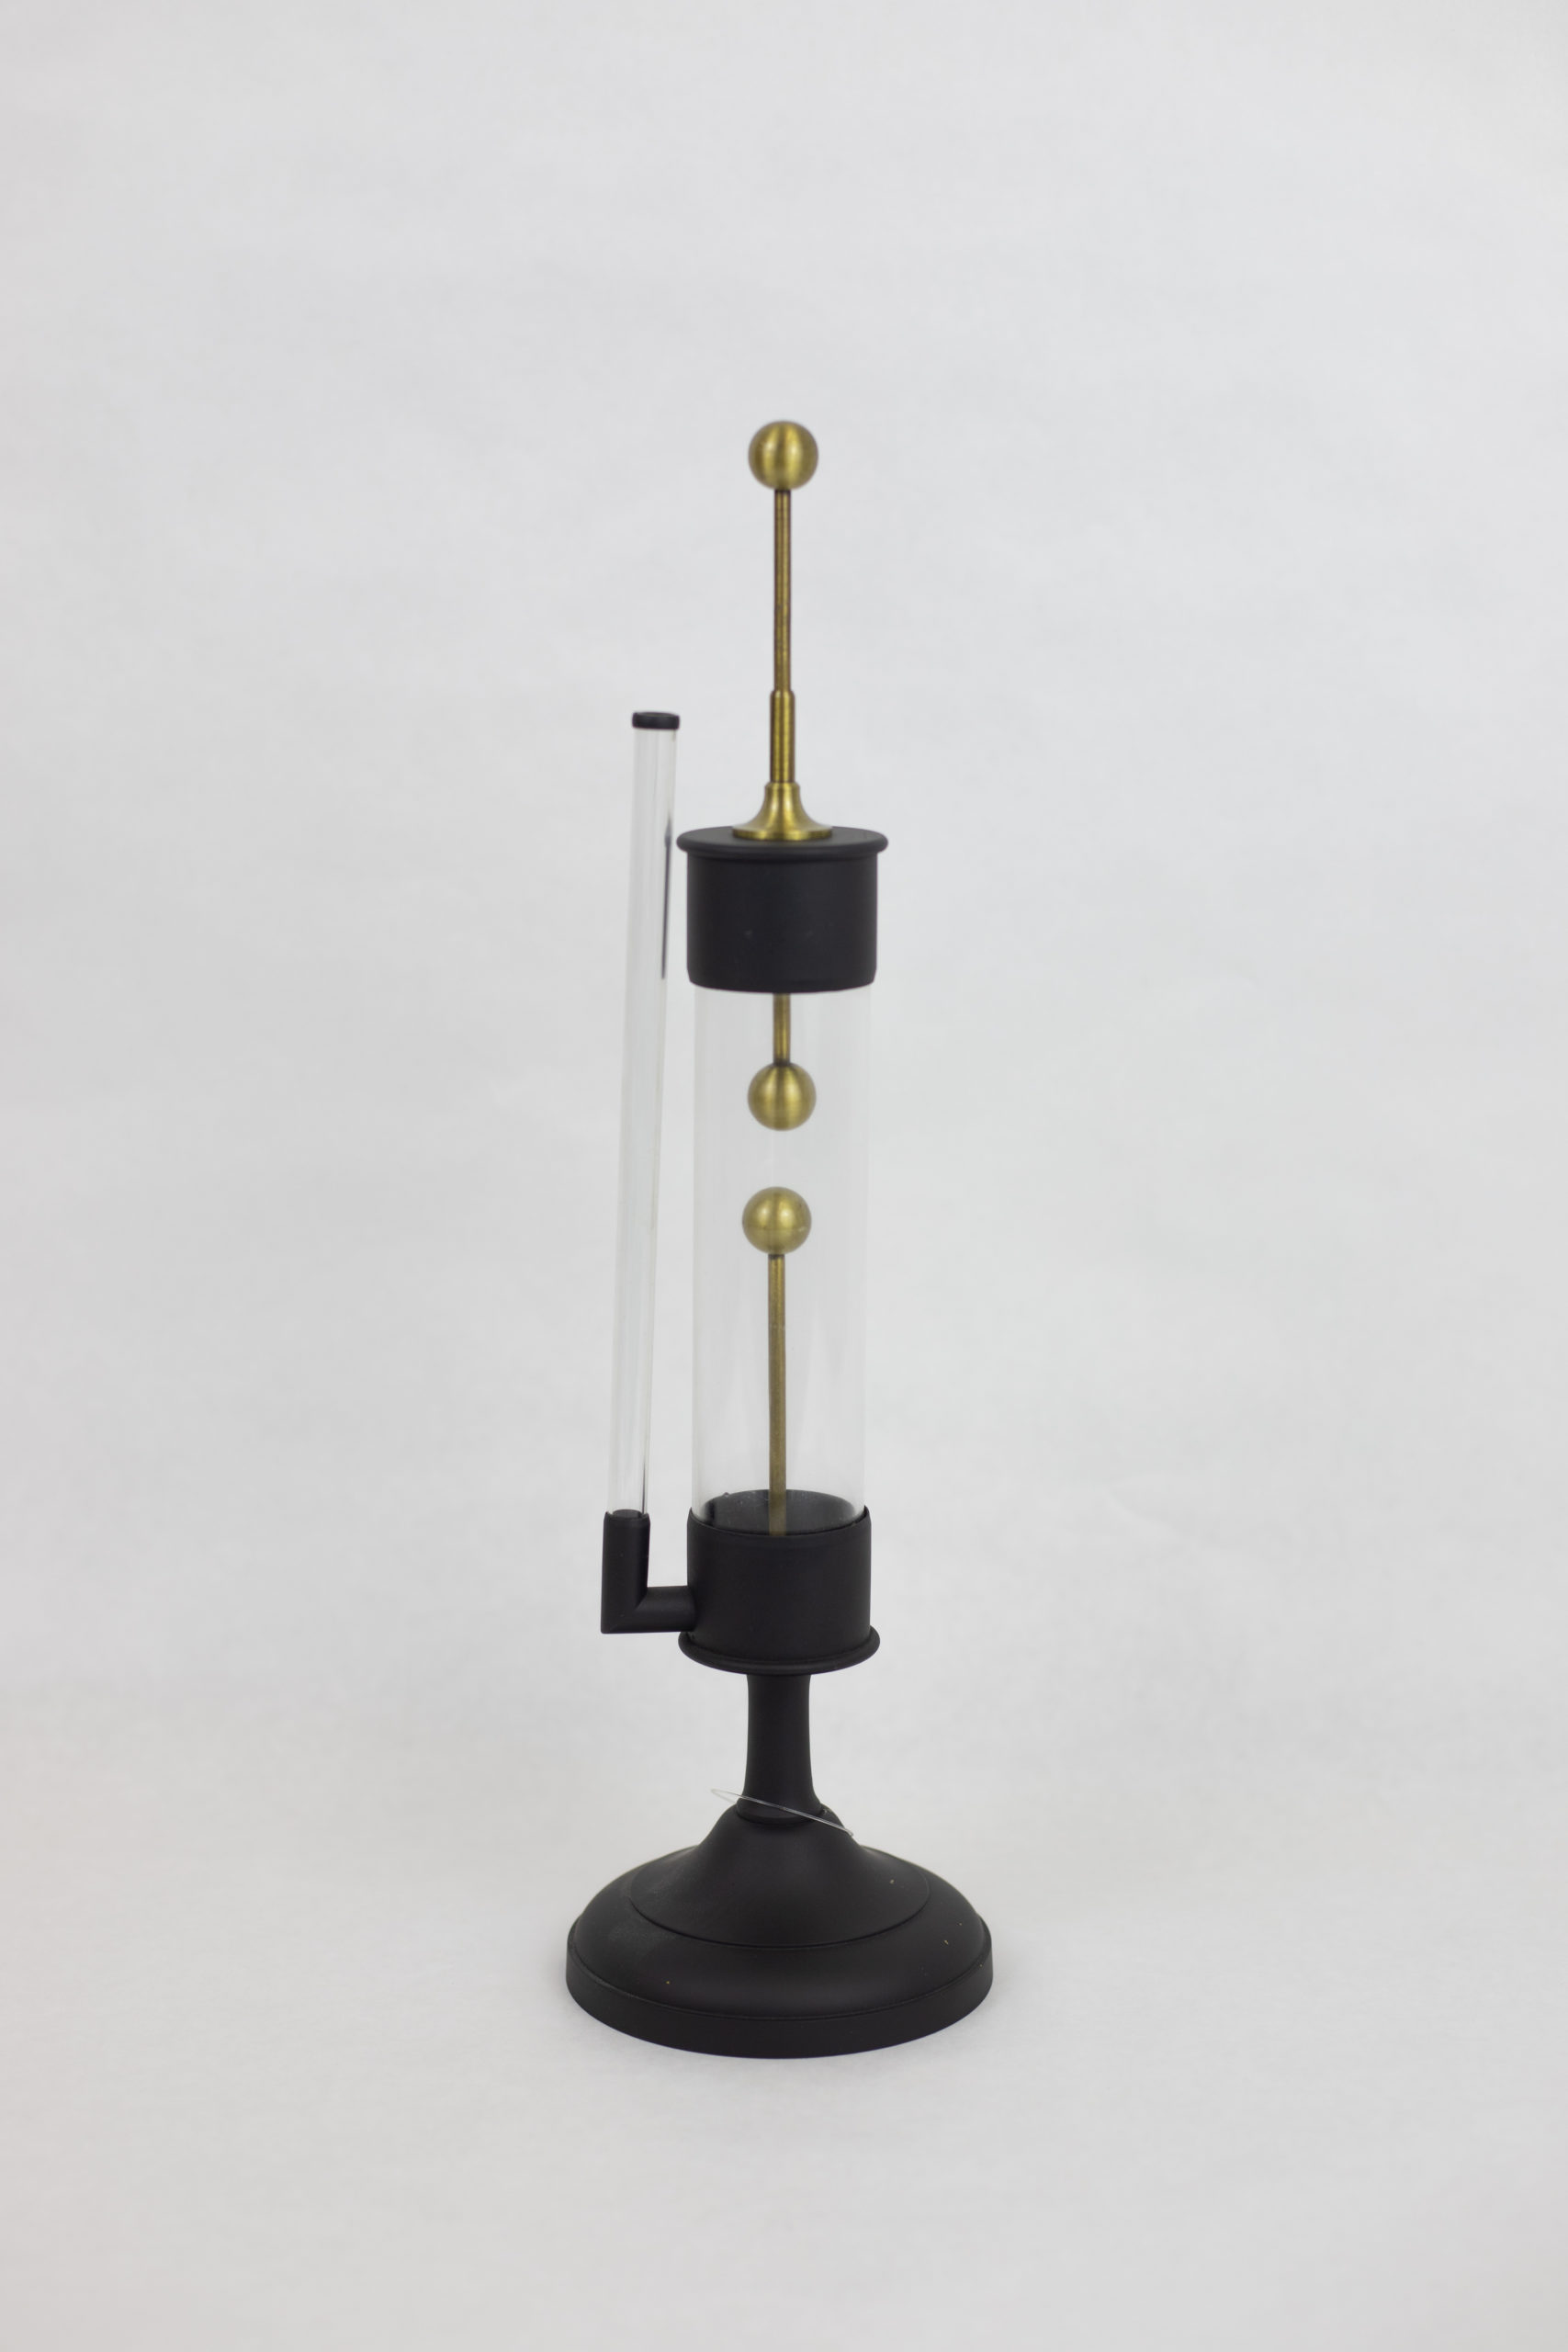 Termòmetre de Kinnersley (electròmetre)